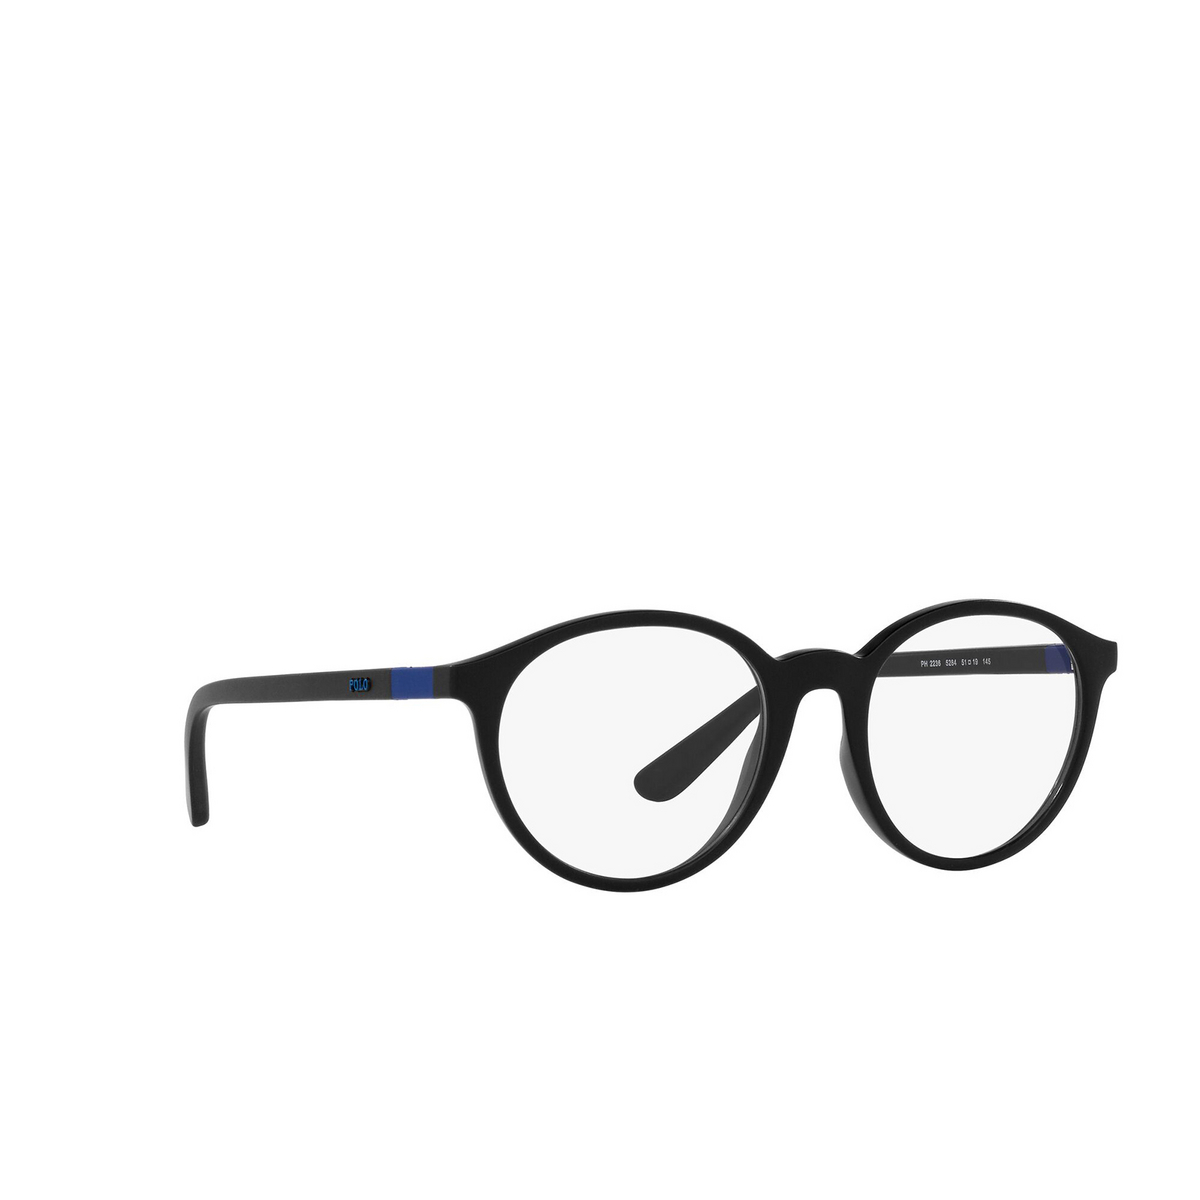 Polo Ralph Lauren® Round Eyeglasses: PH2236 color Matte Black 5284 - three-quarters view.